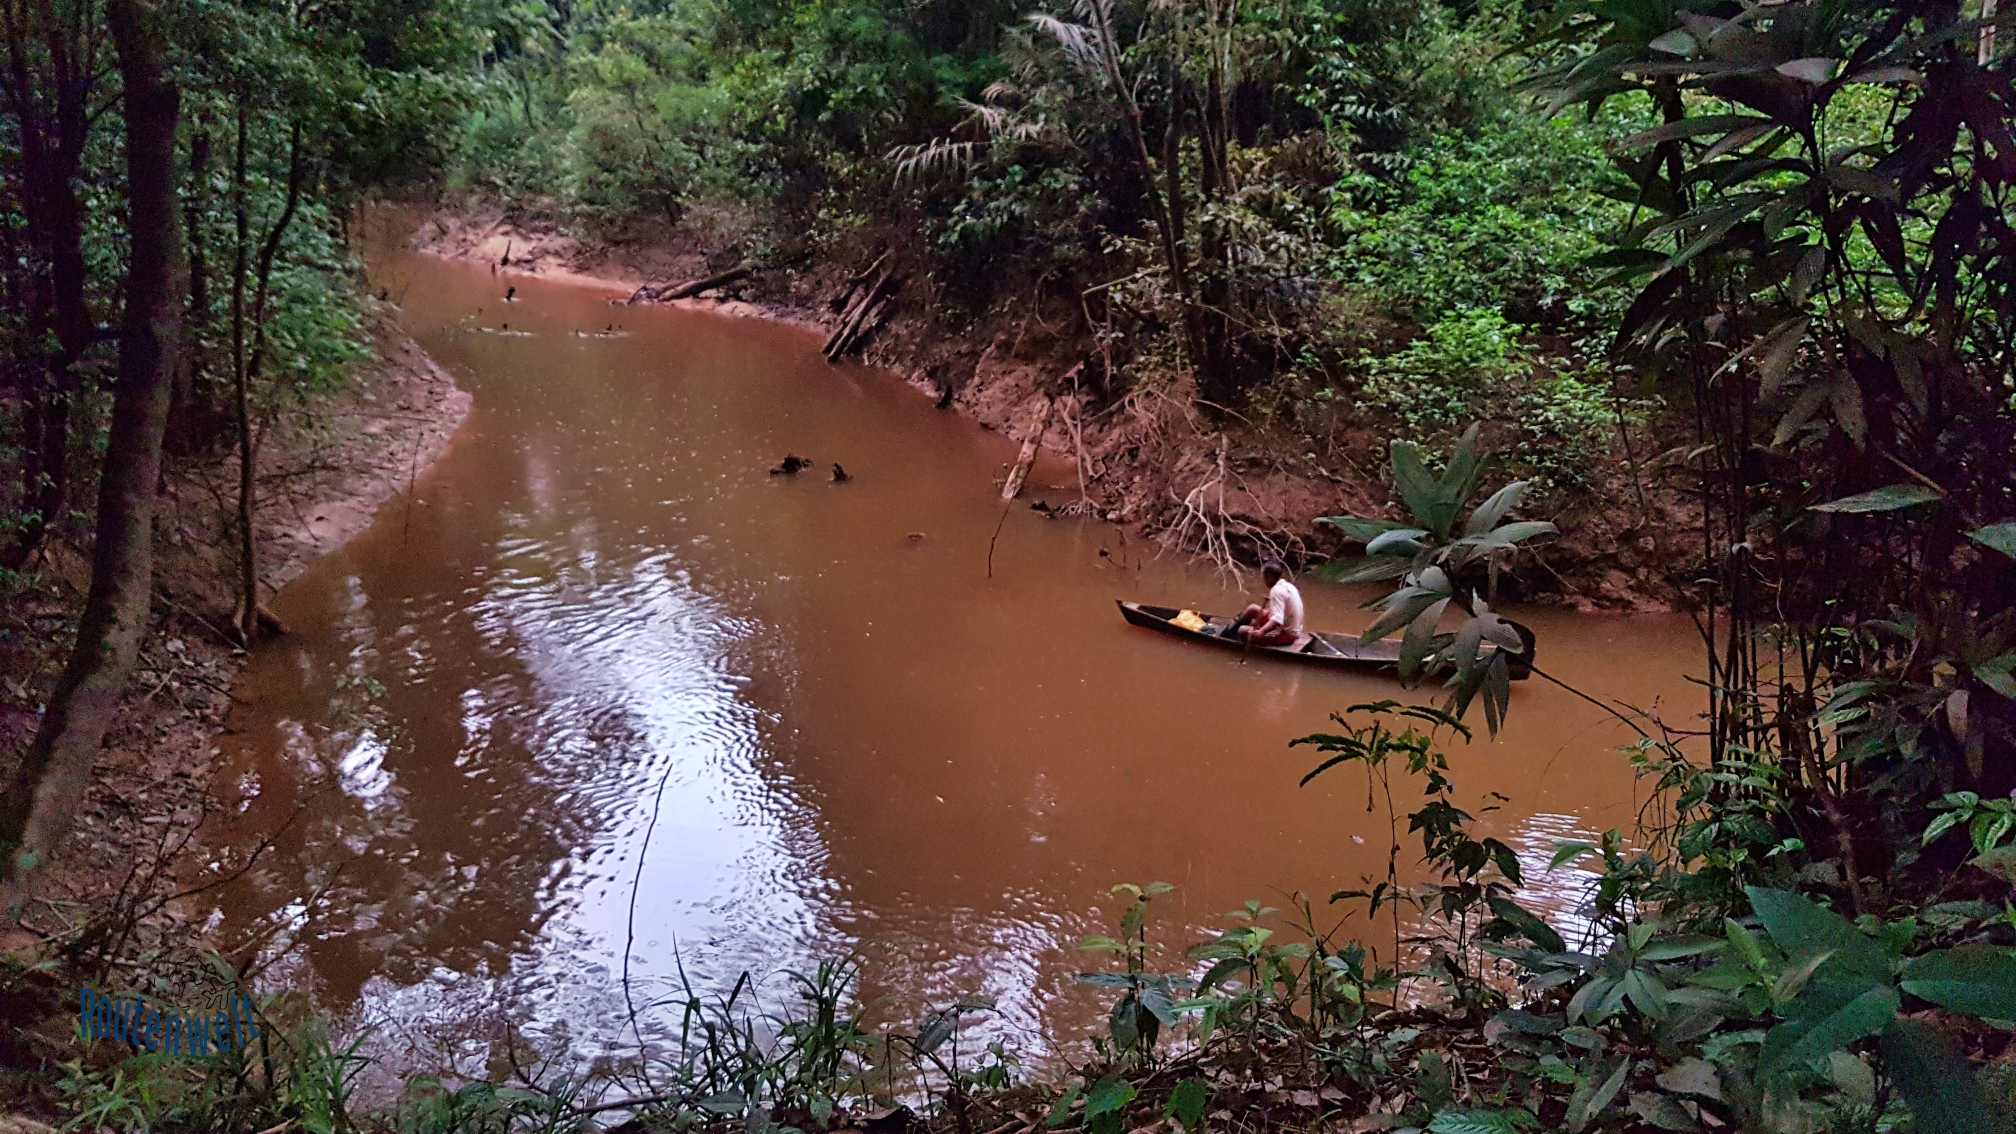 Leticia Sehenswürdigkeiten: Kanufahren am Amazonas